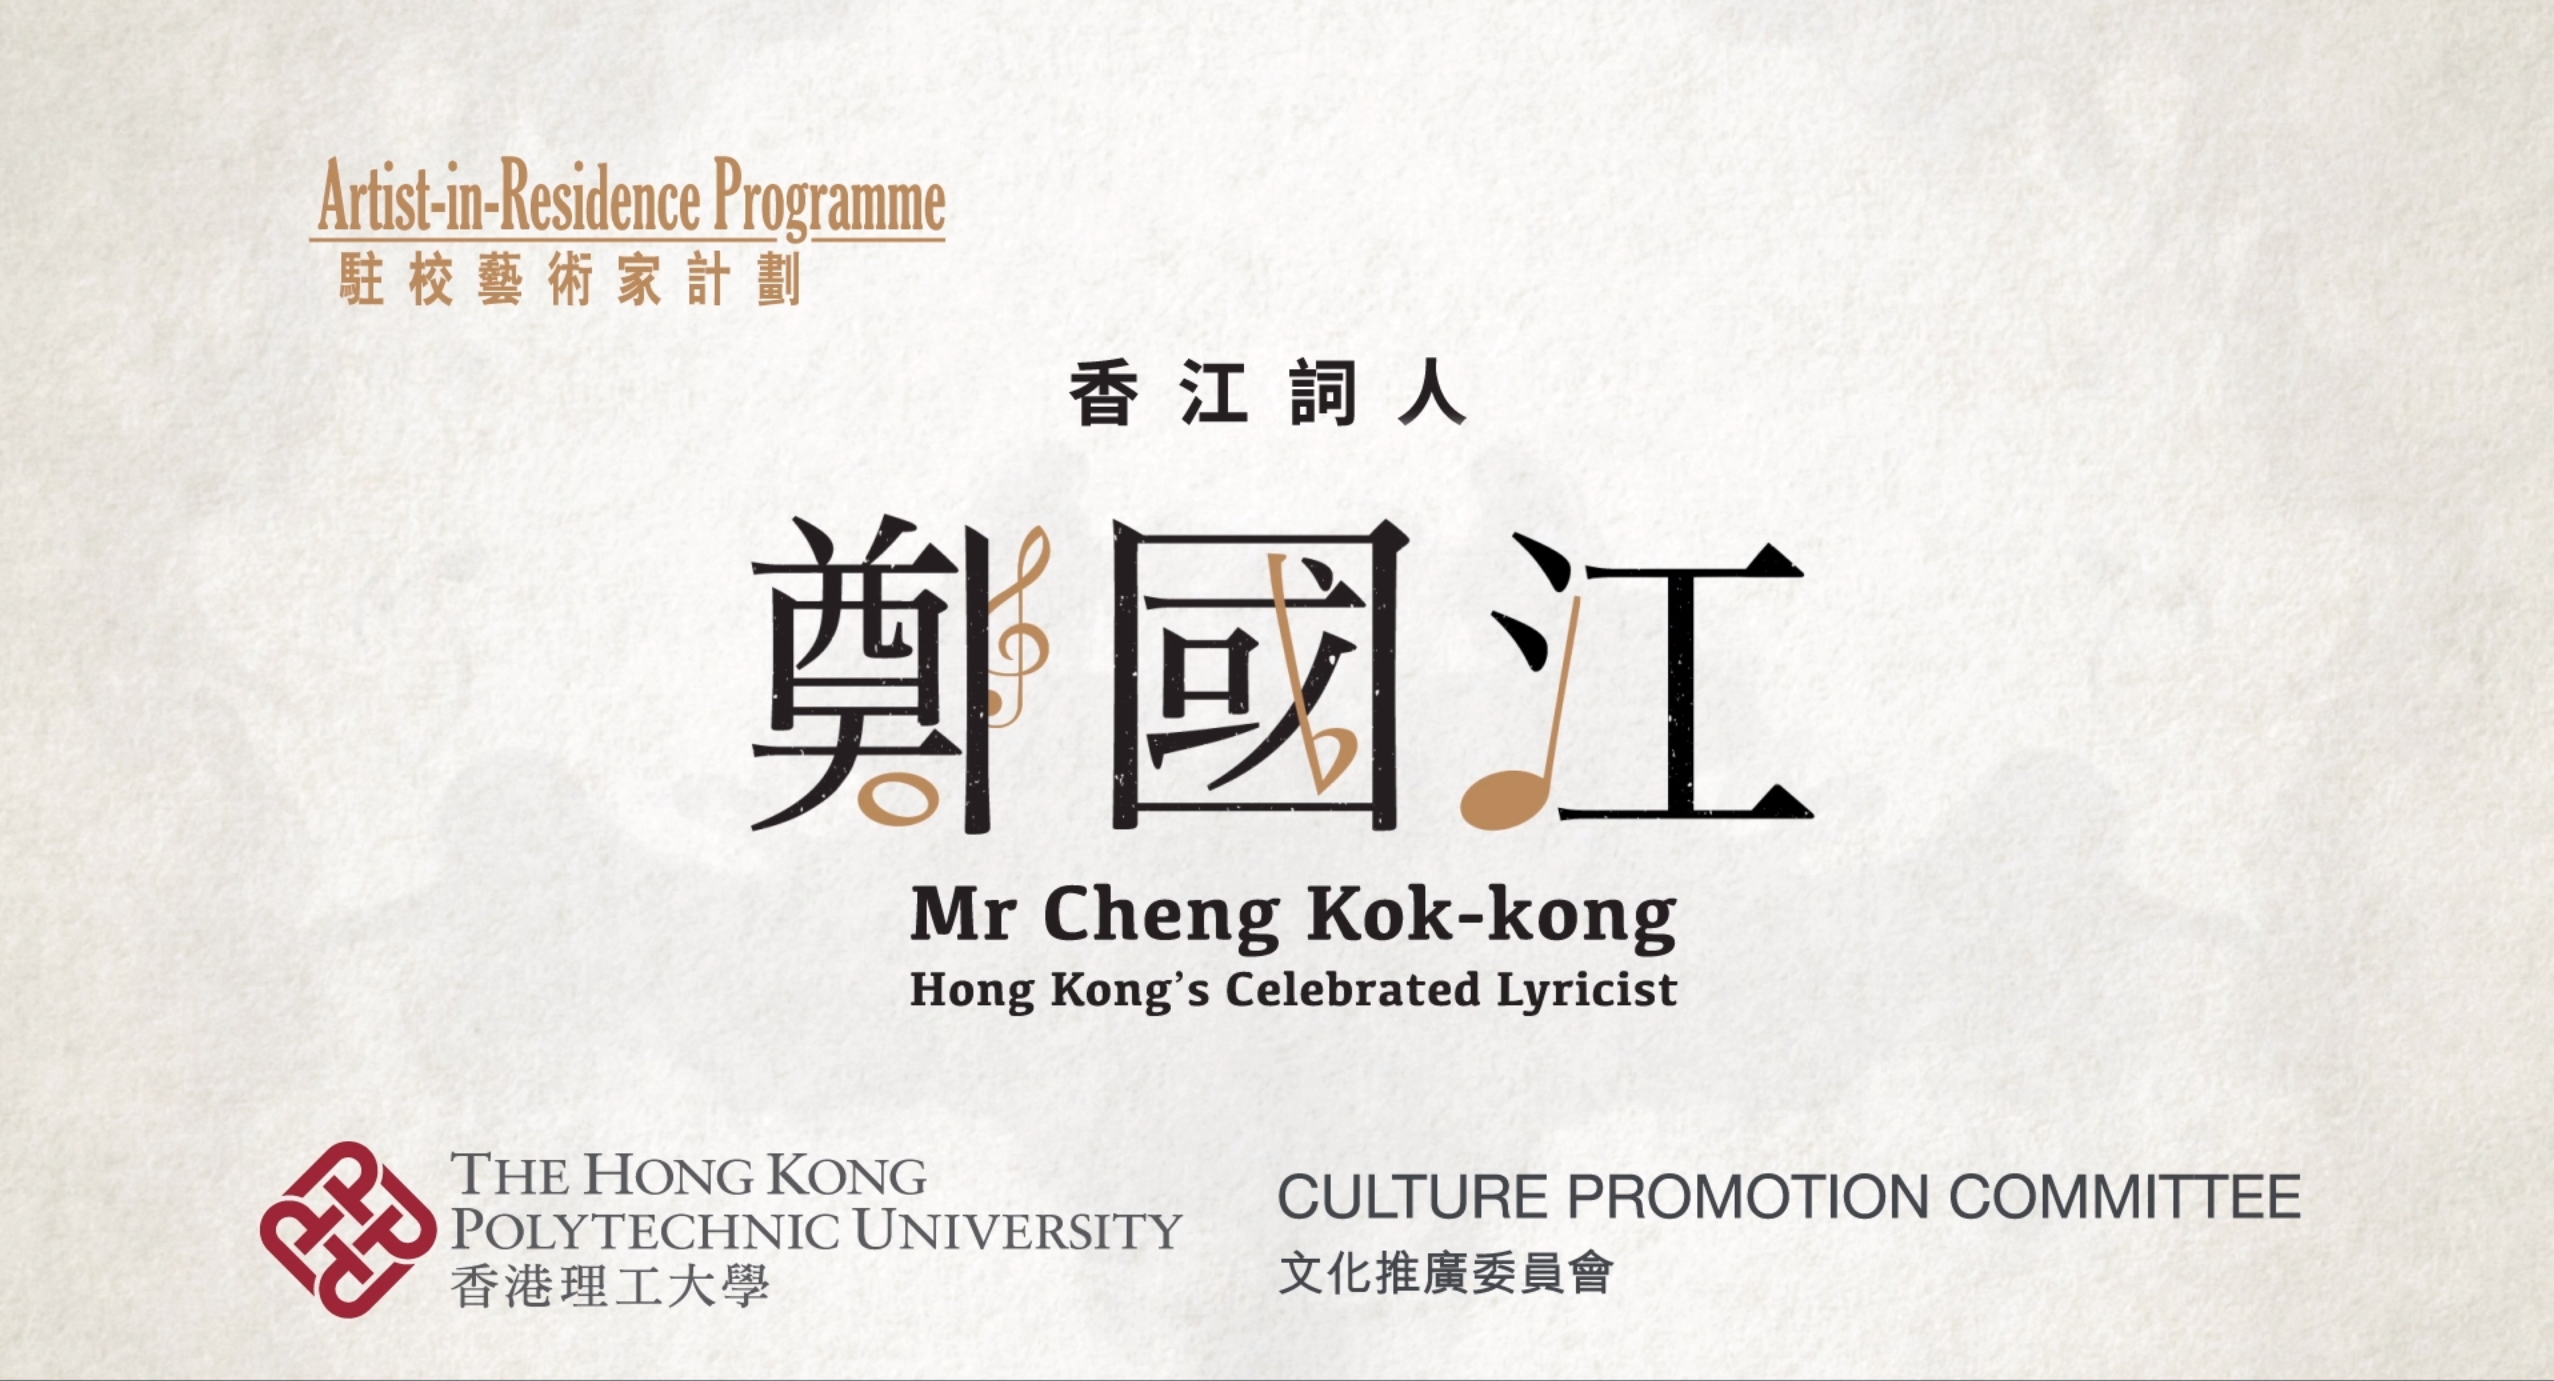 Mr Cheng Kok-kong Hong Kong's Celebrated Lyricist